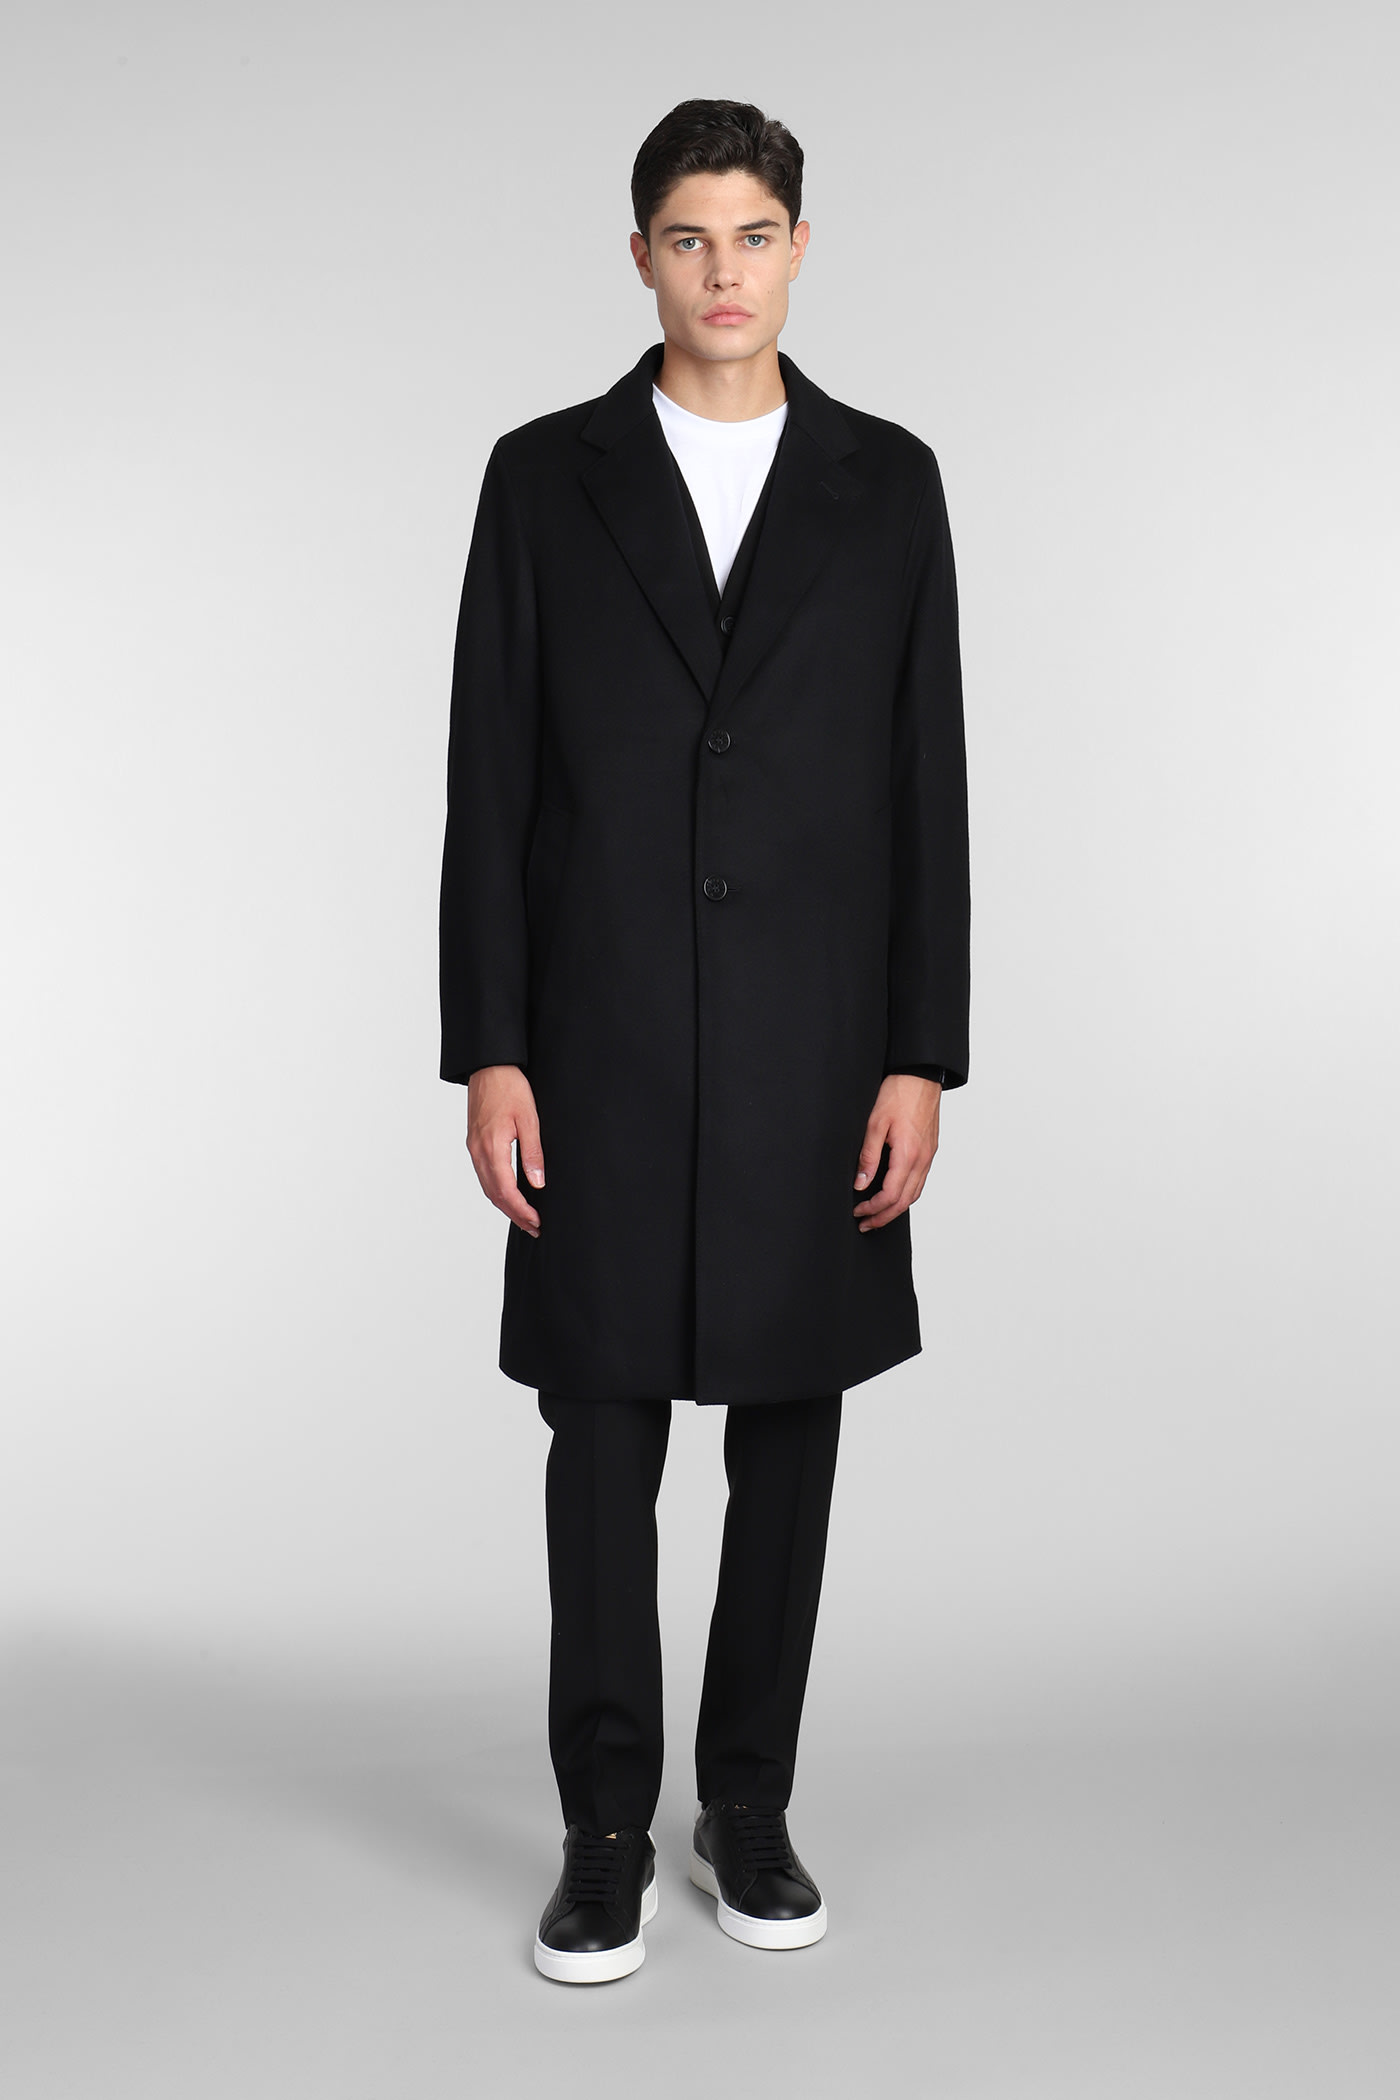 Men's MACKINTOSH Coats Sale, Up To 70% Off | ModeSens